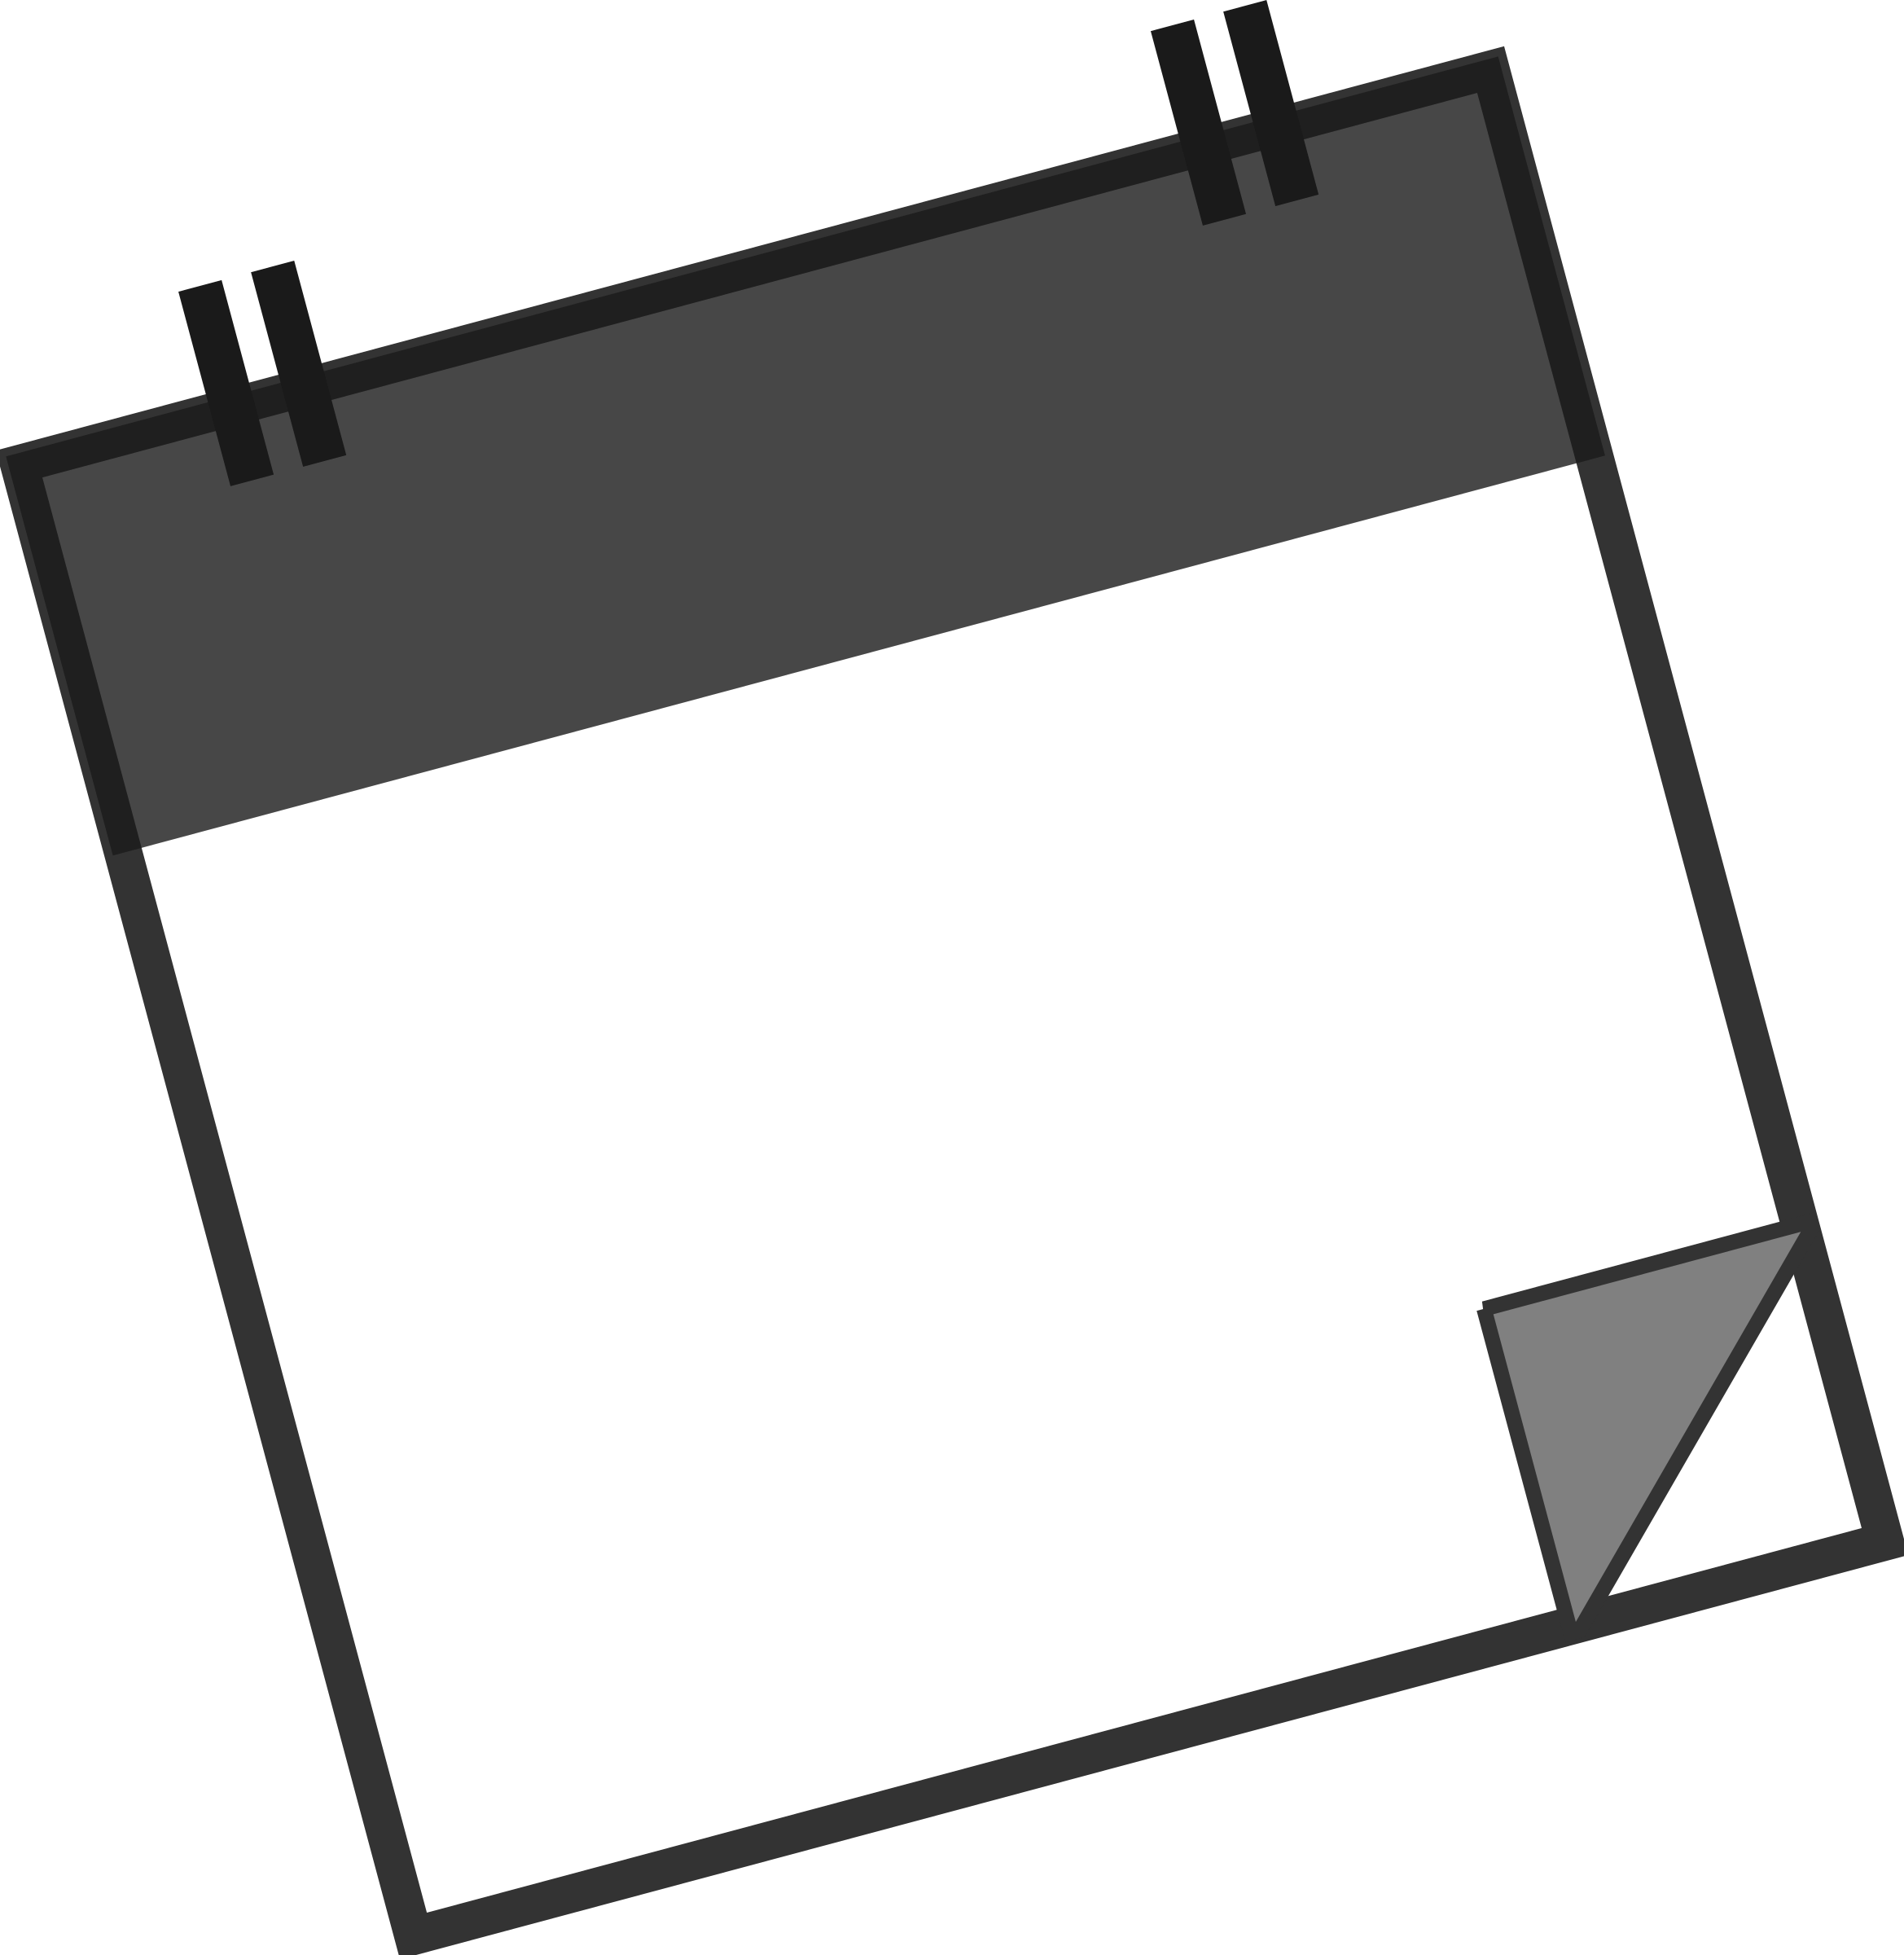 A Black Square With A Corner